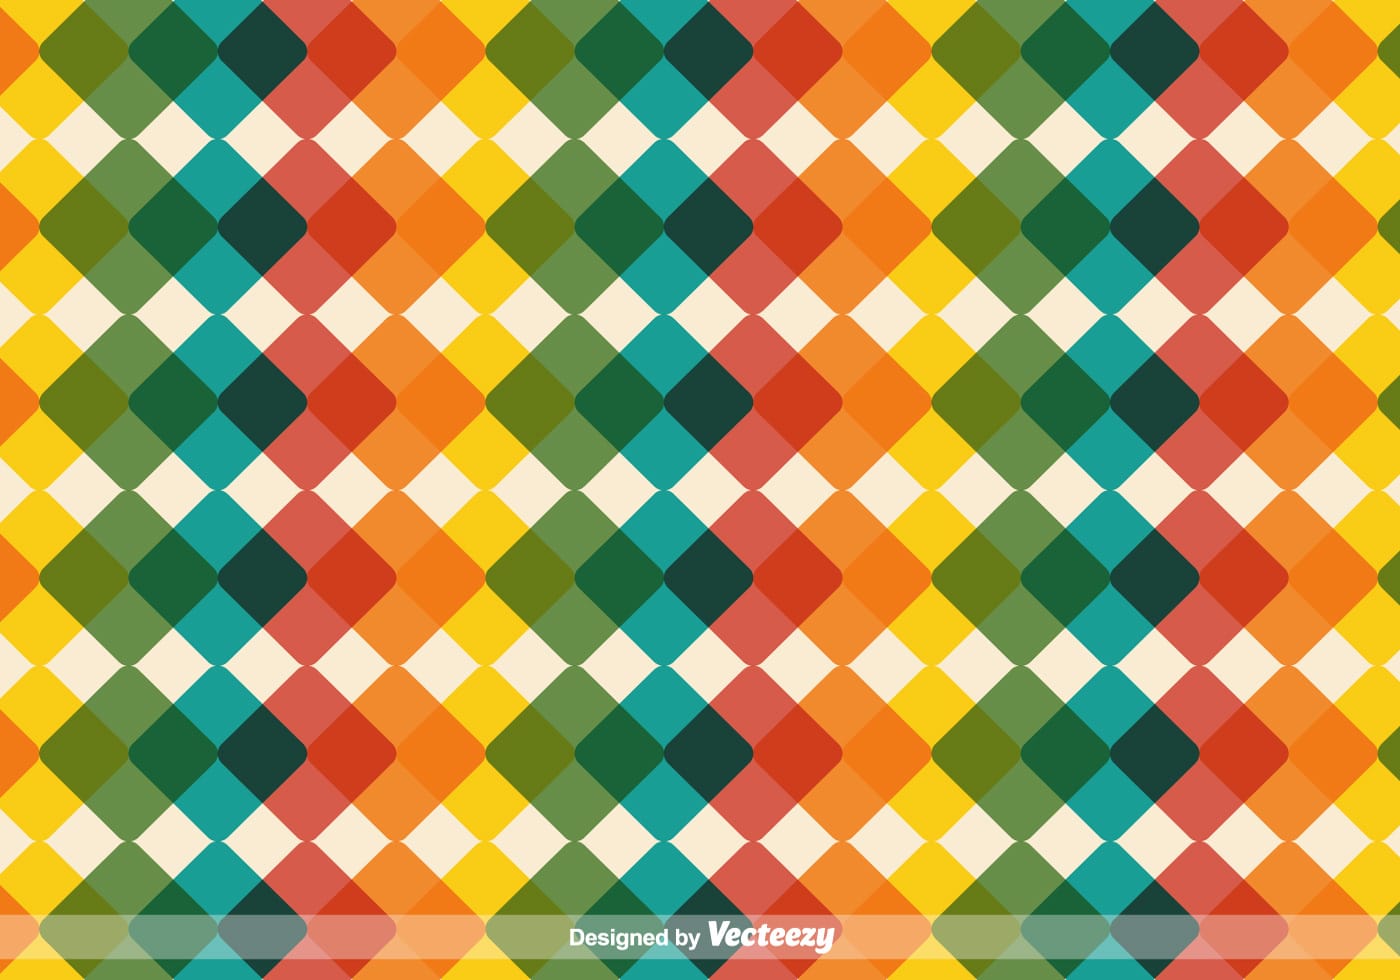 Modern Checkered Vector Background - Download Free Vector ...
 Repeating Checkered Flag Background